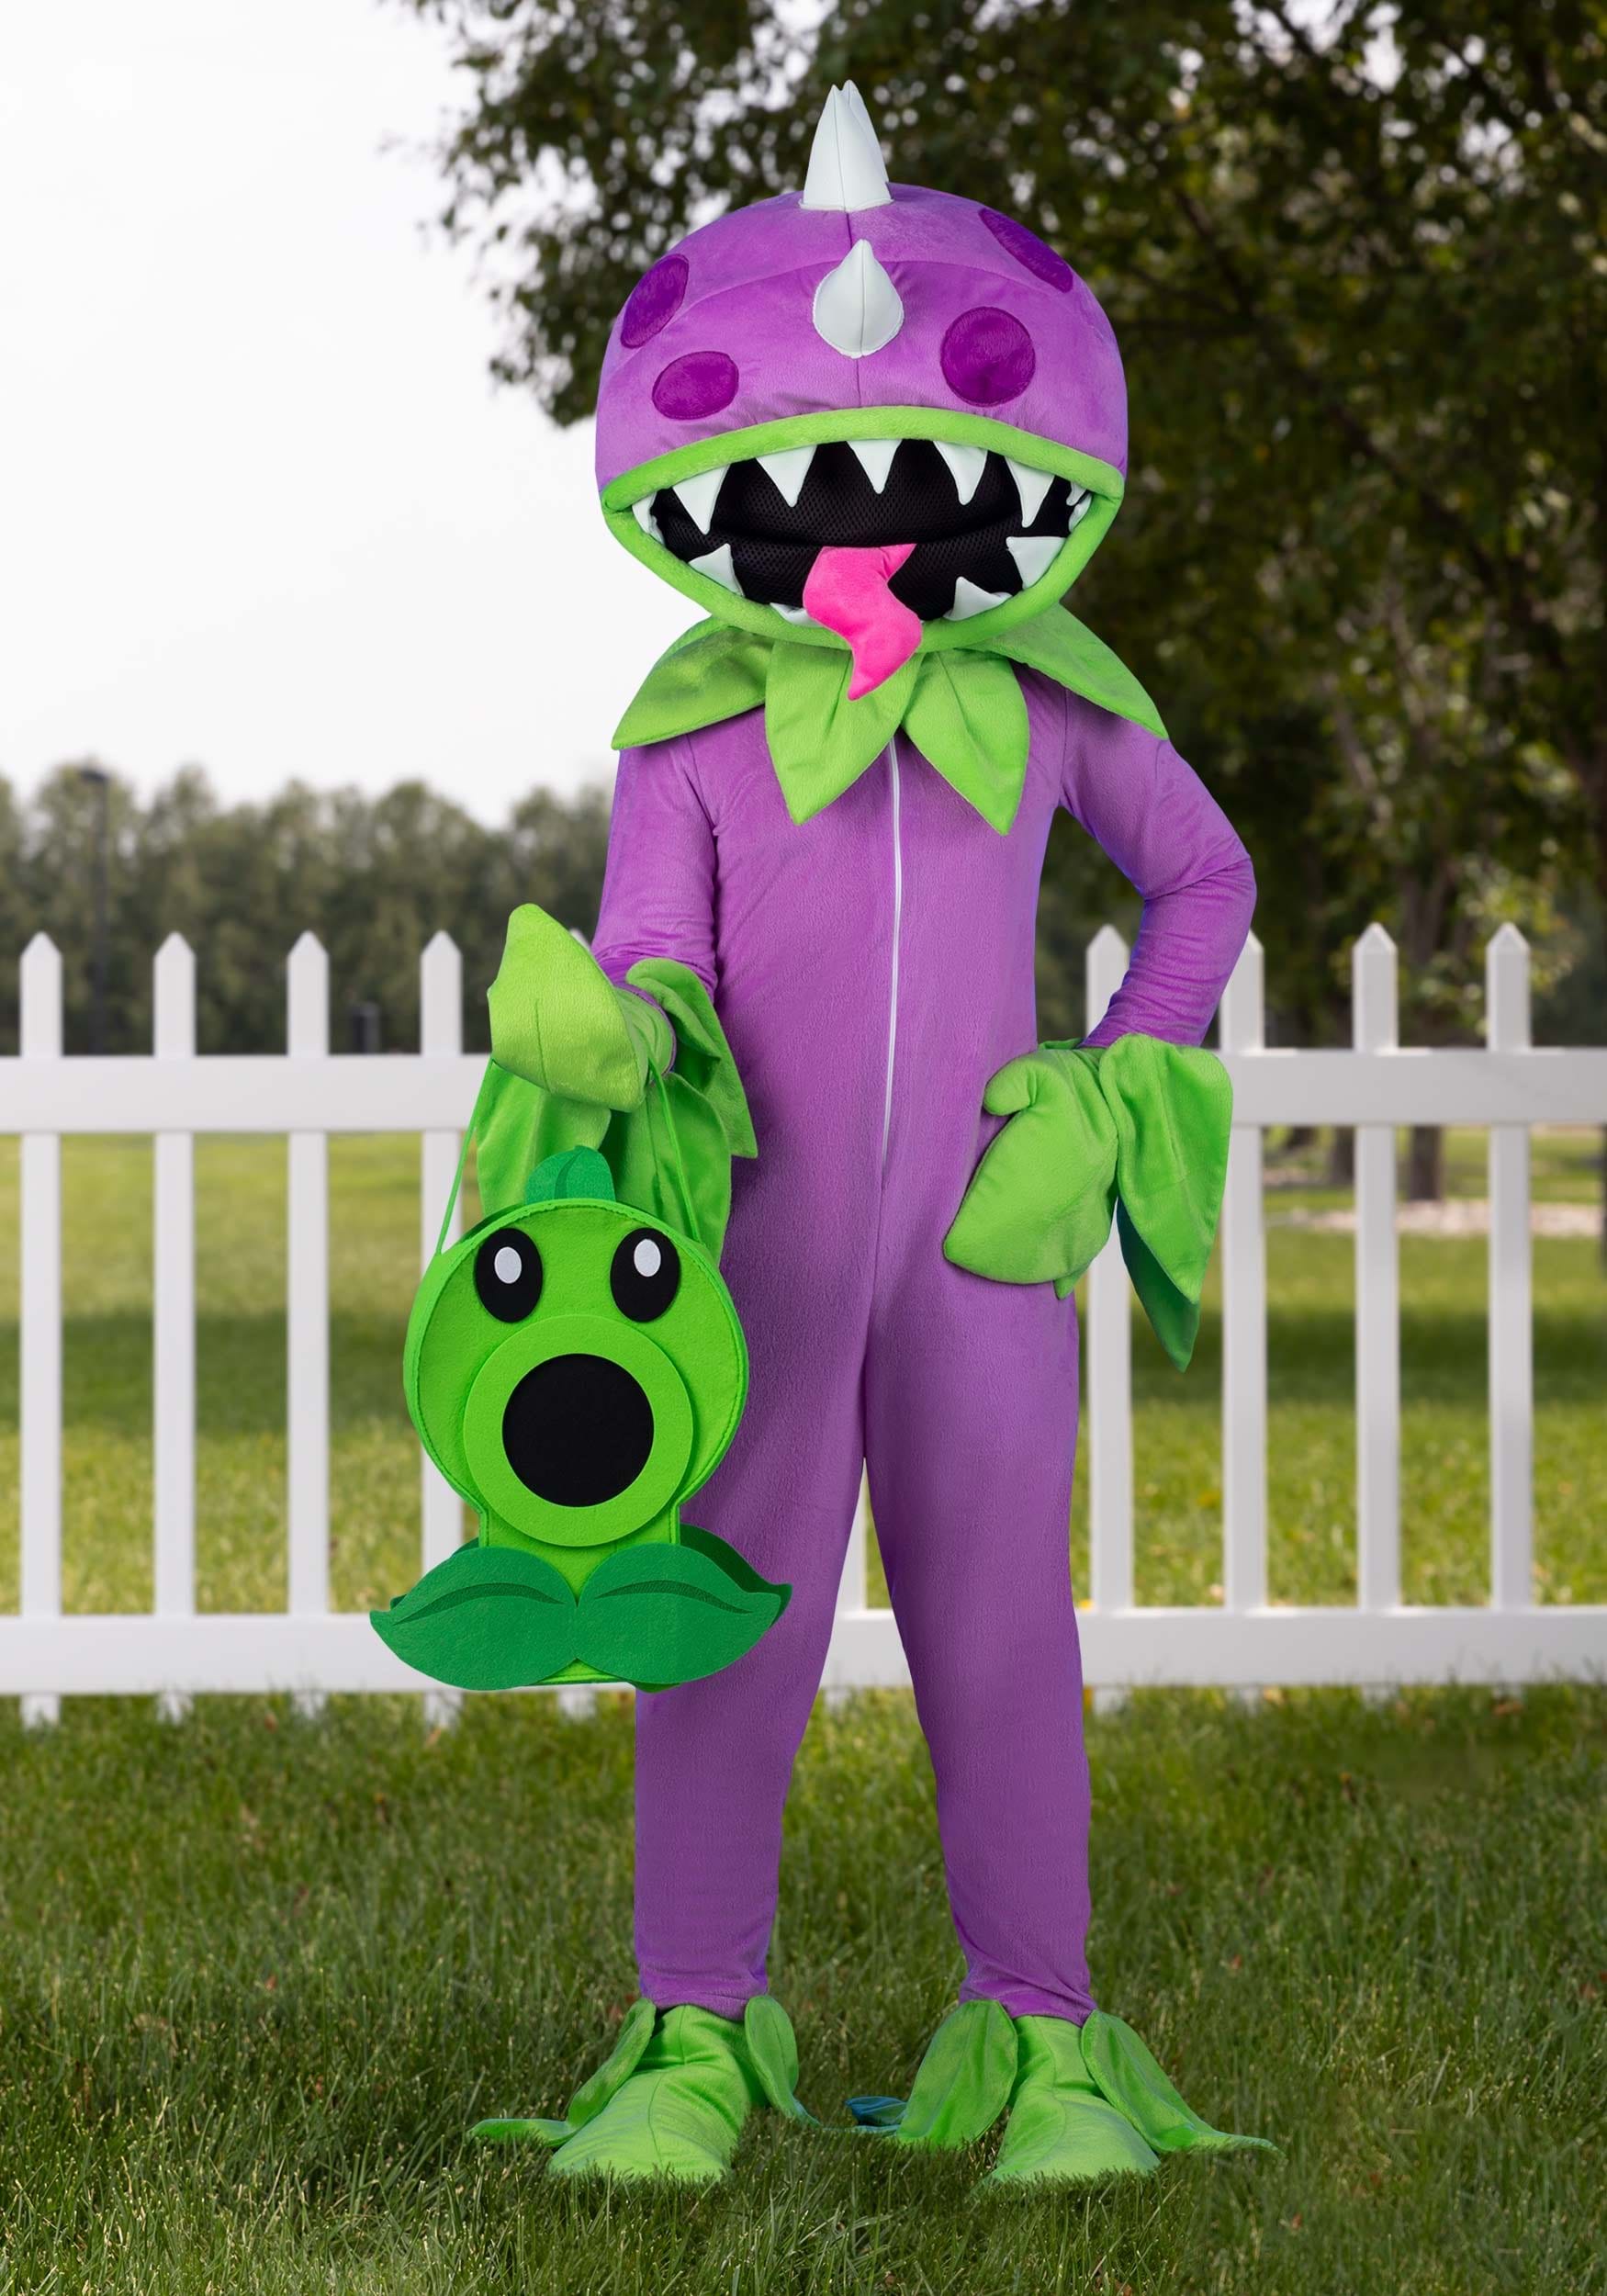 Plants Vs Zombies Zombie Costume for Kids